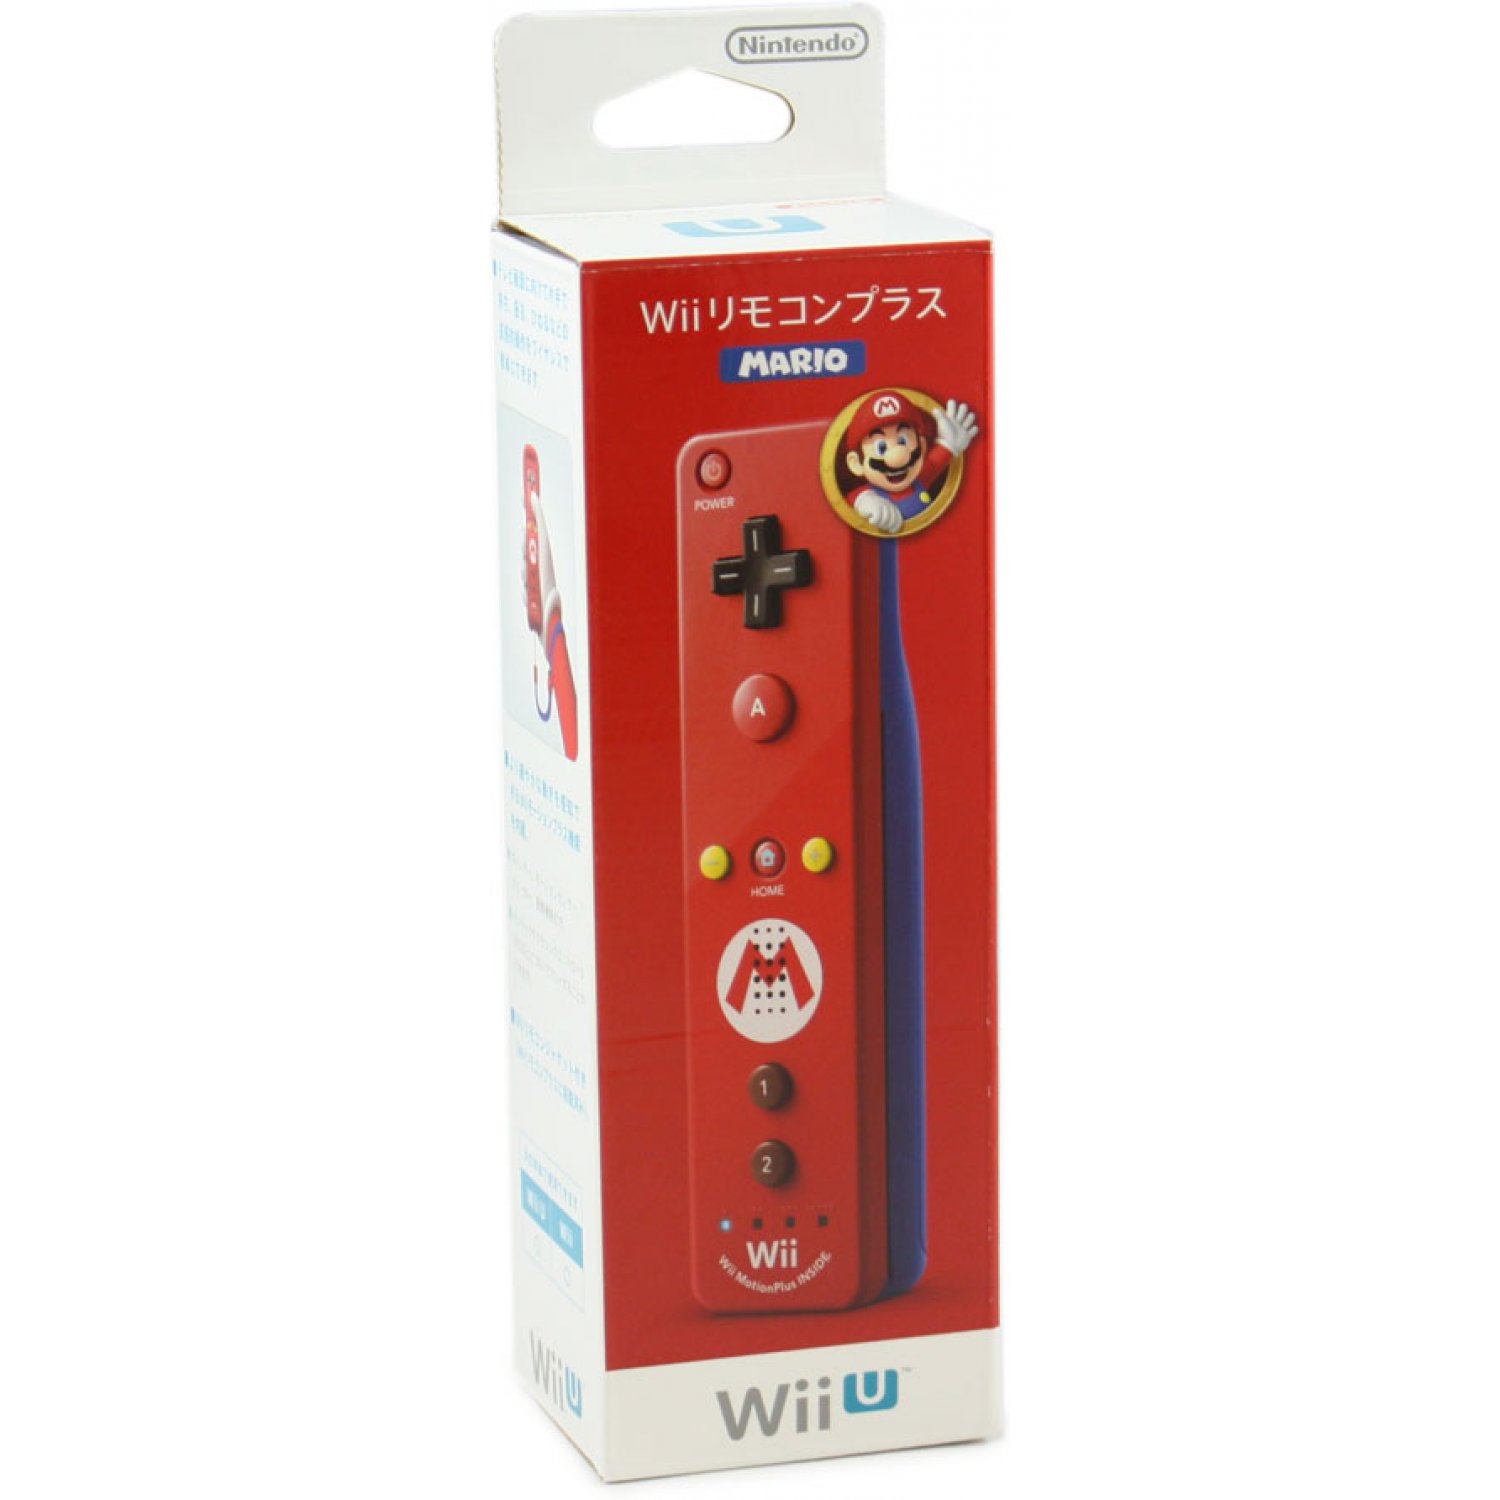 Nintendo Wii Remote Plus Mario Limited Edition (JP, újszerű)